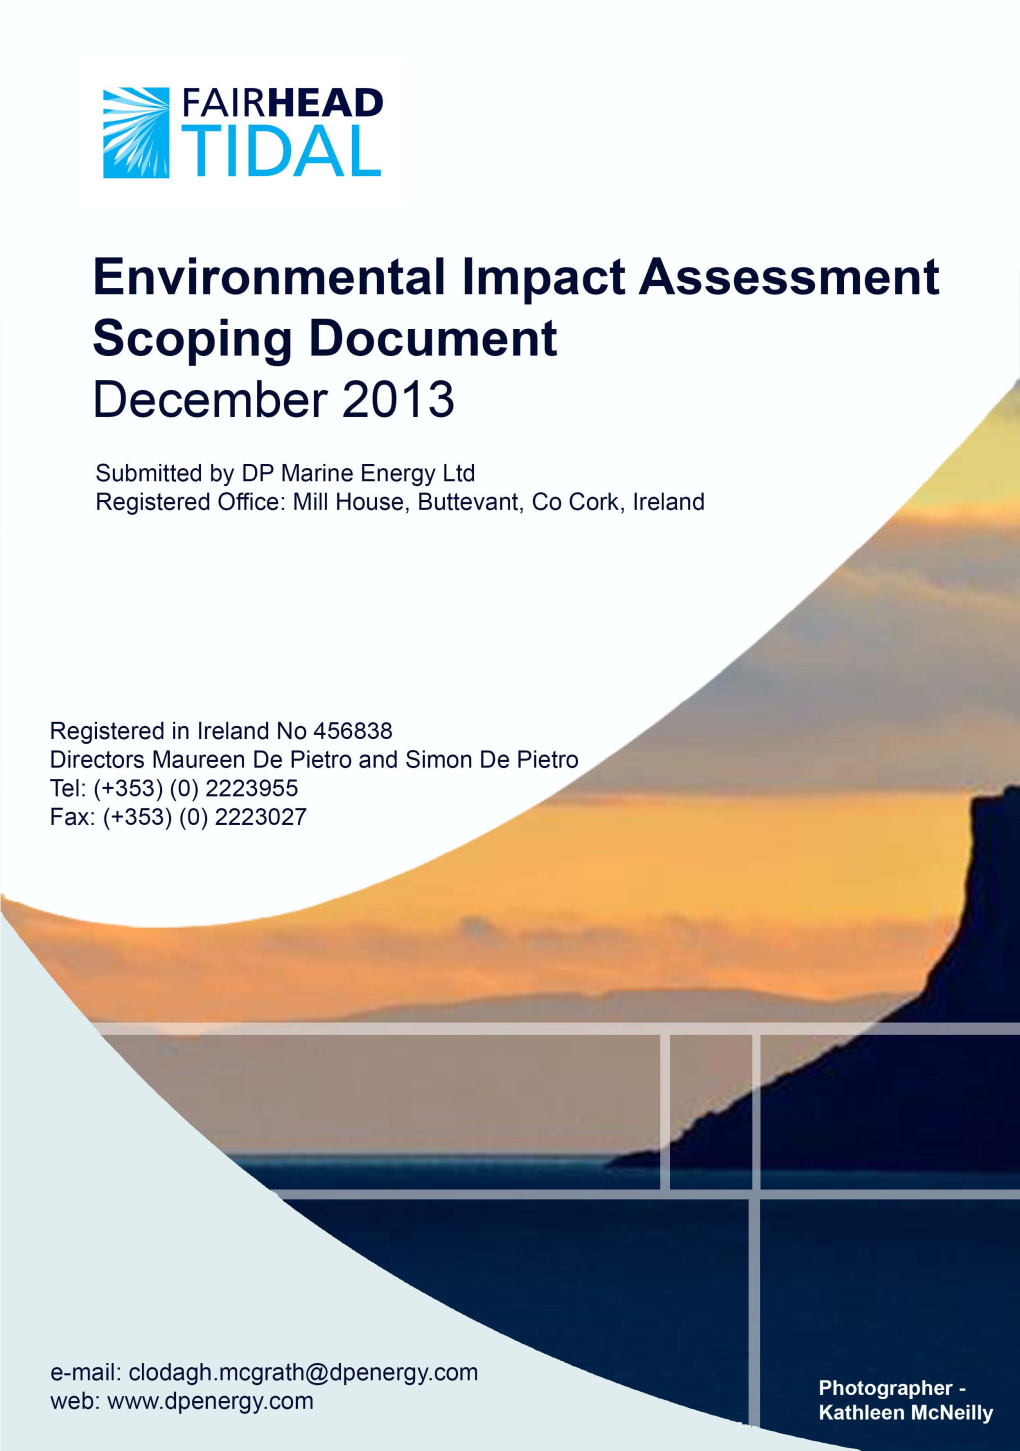 4.0 Environmental Impact Assessment